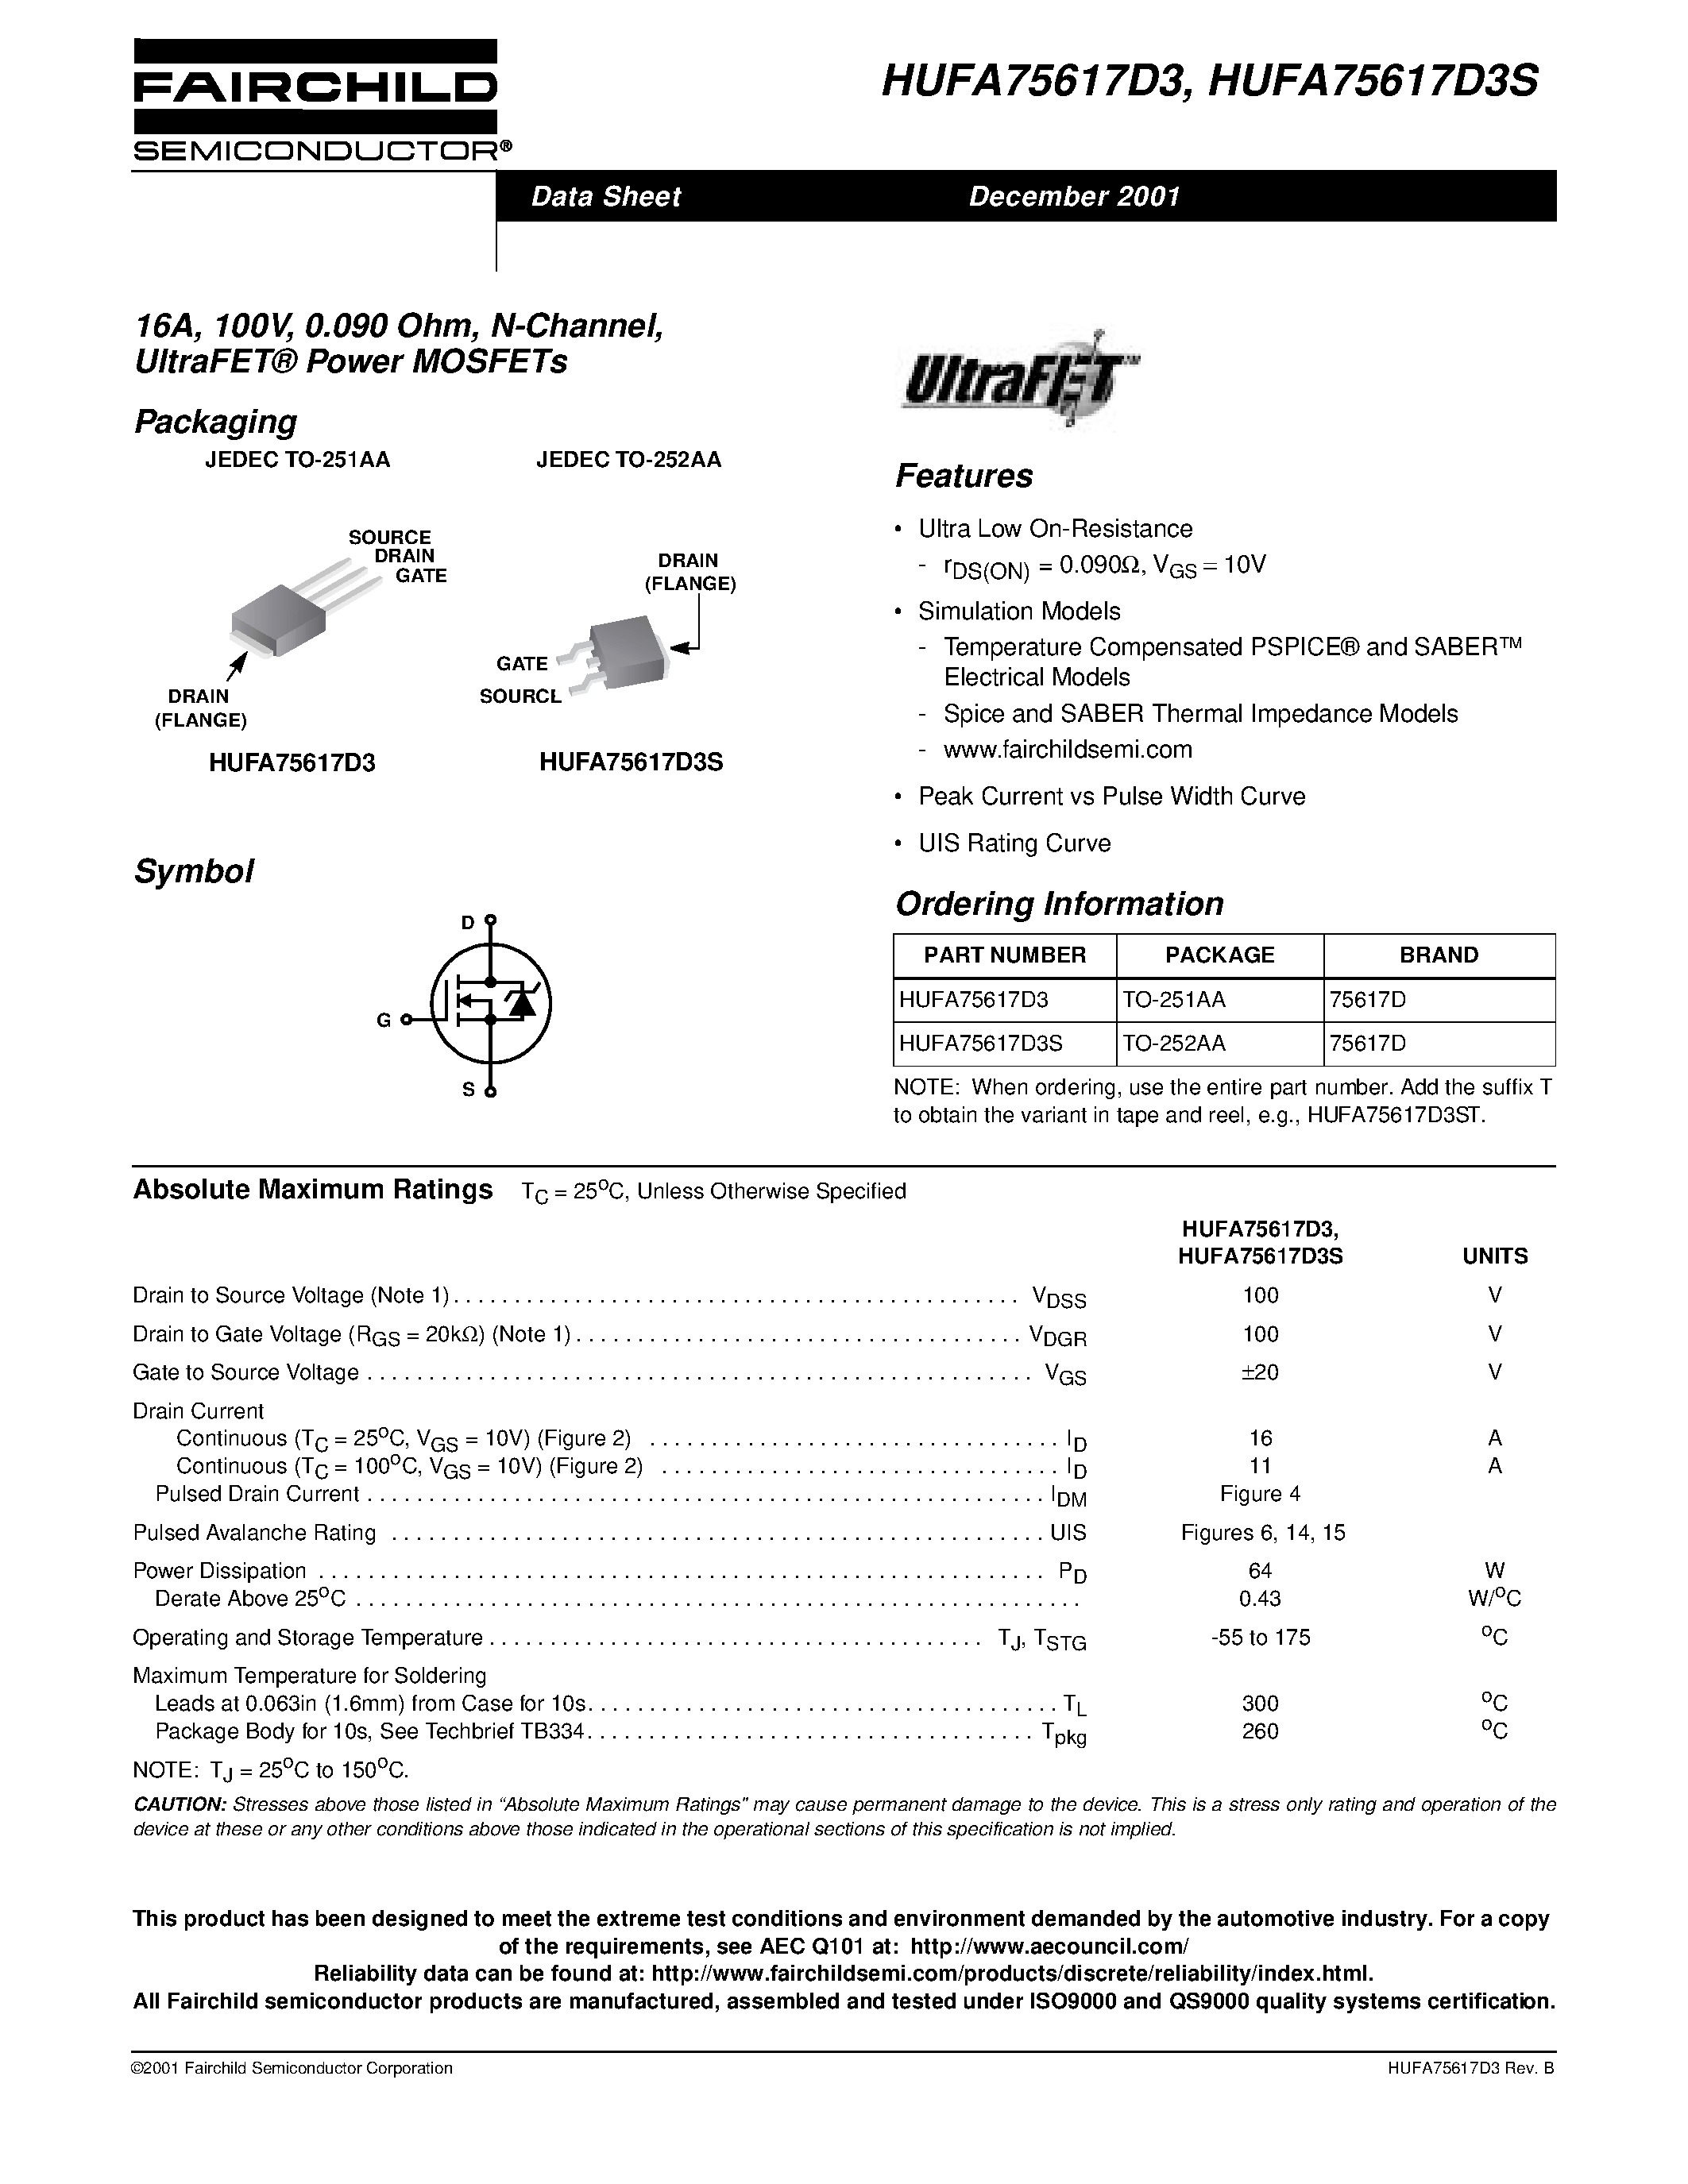 Даташит HUFA75617D3 - 16A/ 100V/ 0.090 Ohm/ N-Channel/ UltraFET Power MOSFETs страница 1